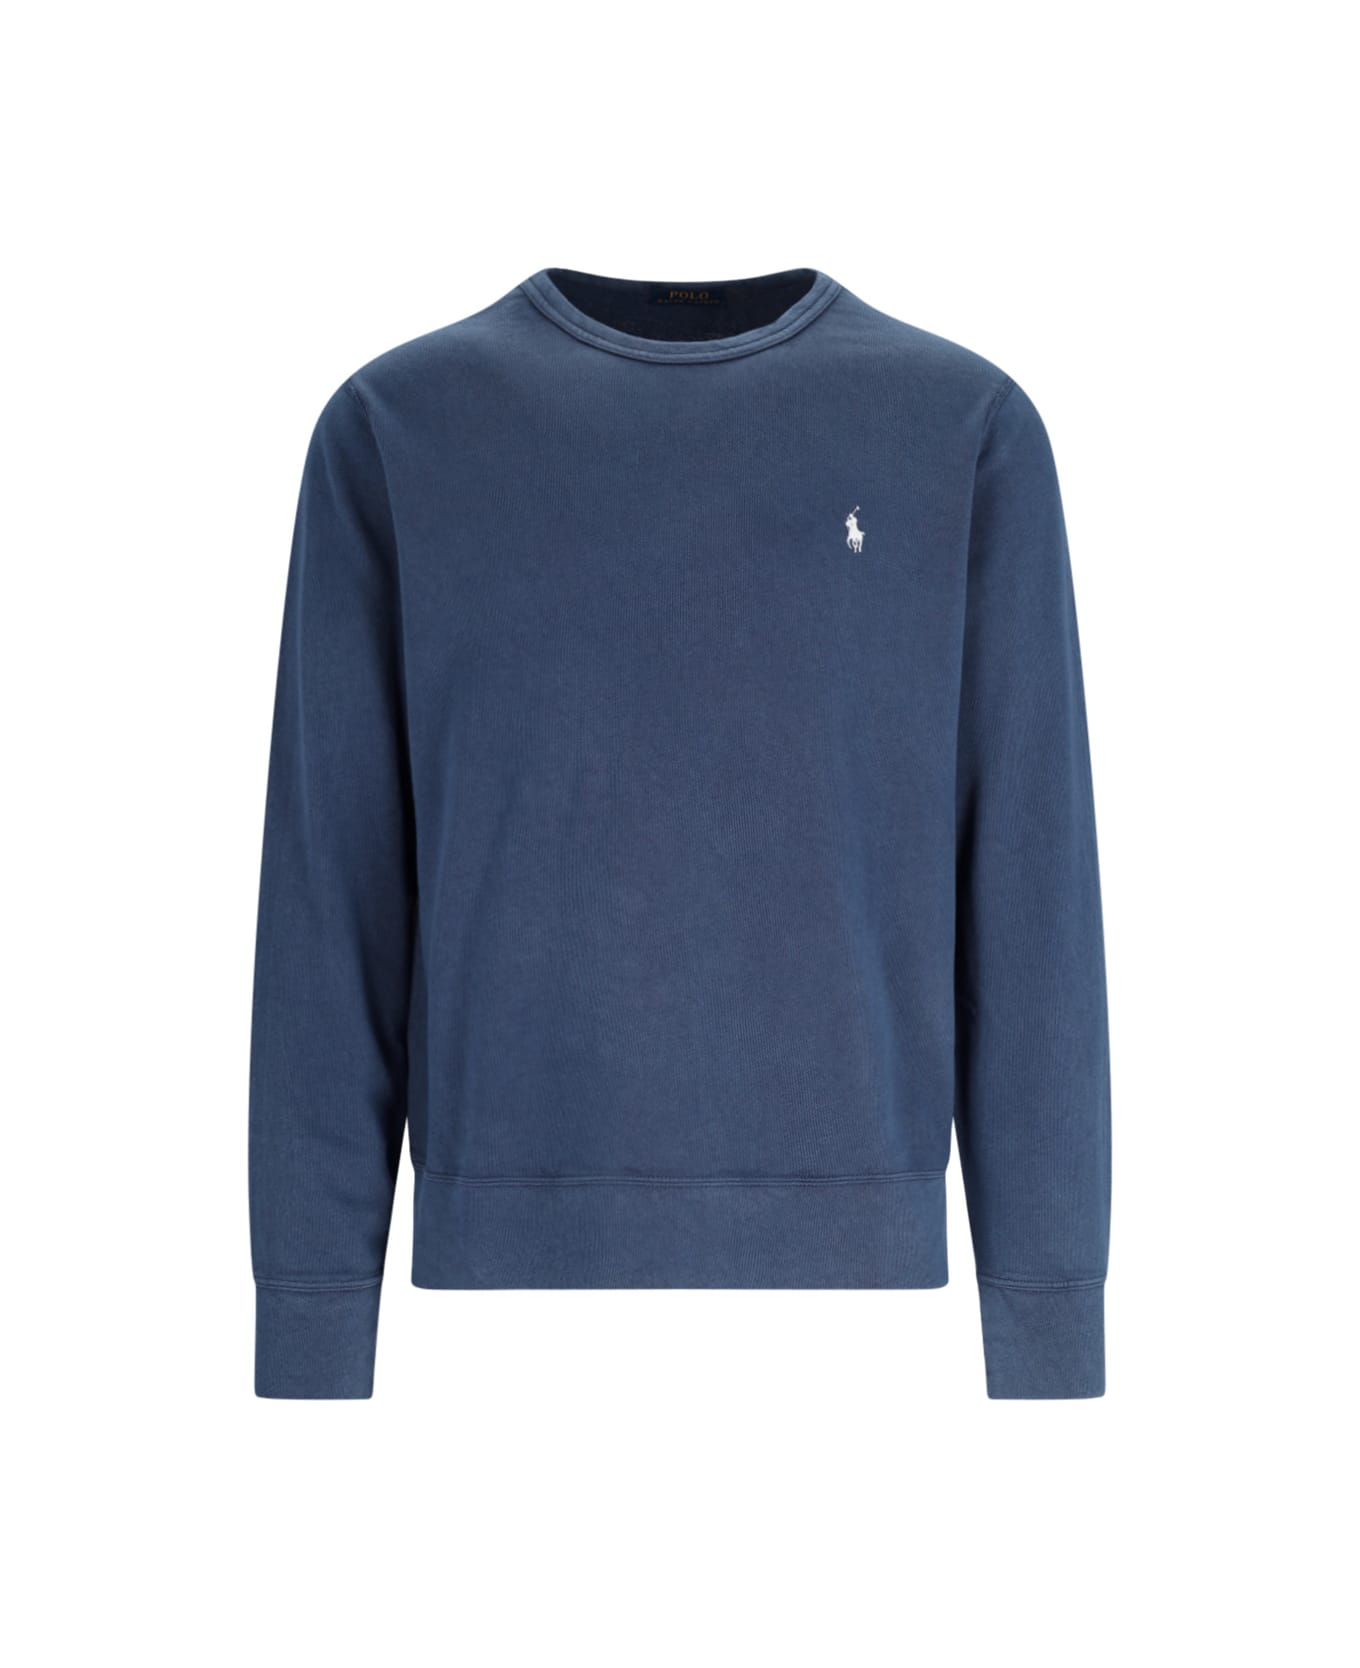 Polo Ralph Lauren Crew Neck Logo Sweatshirt - Blue フリース